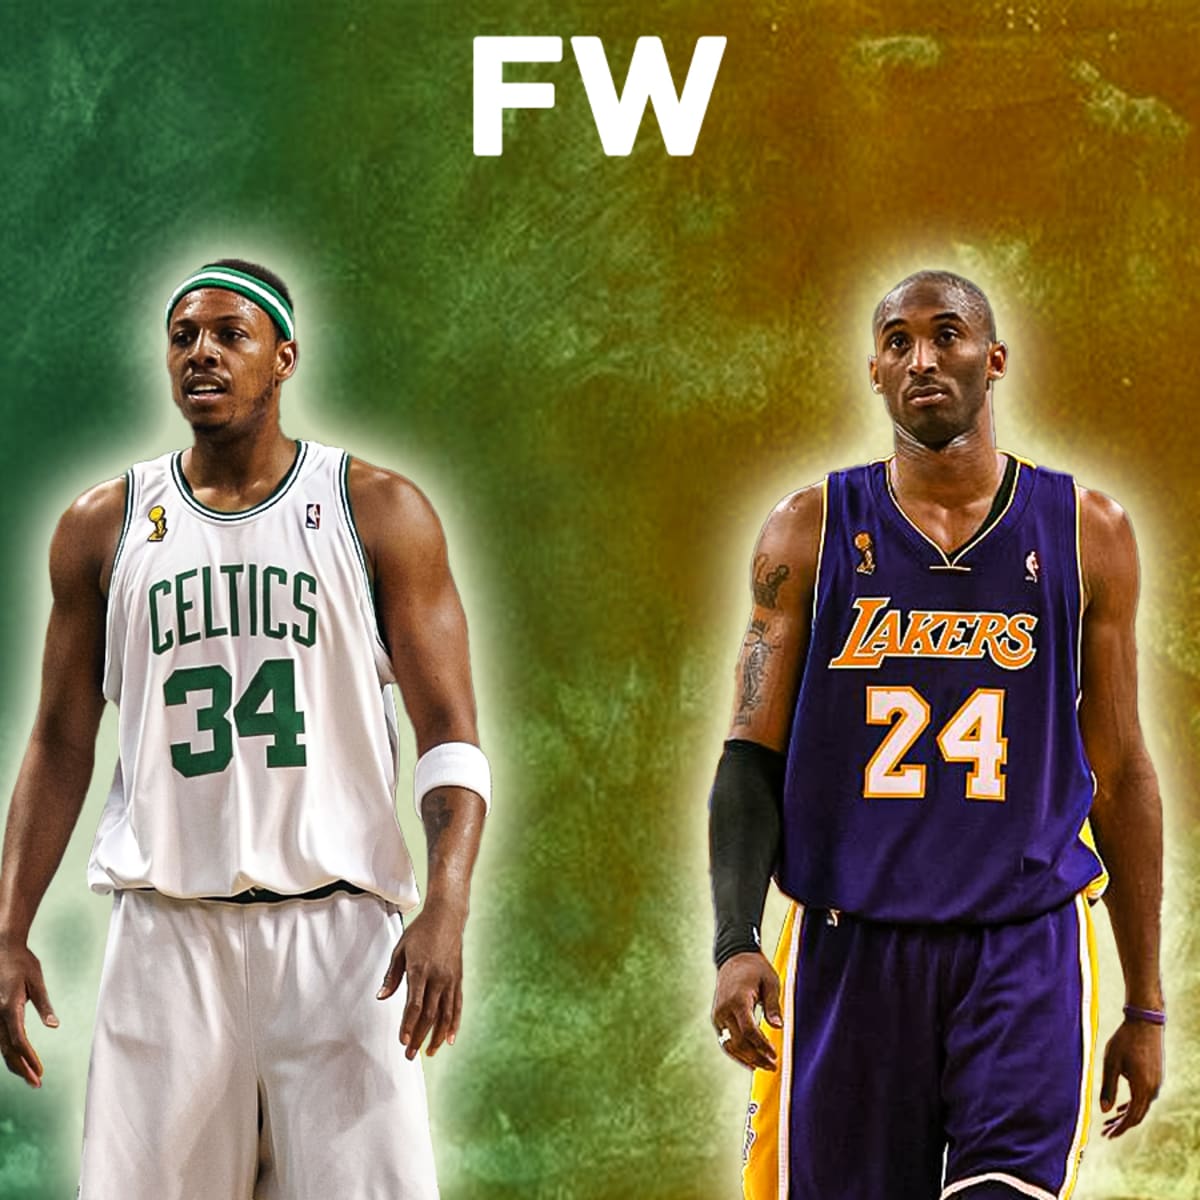 Kobe Bryant and the Lakers destroy Boston Celtics; Game 7 next